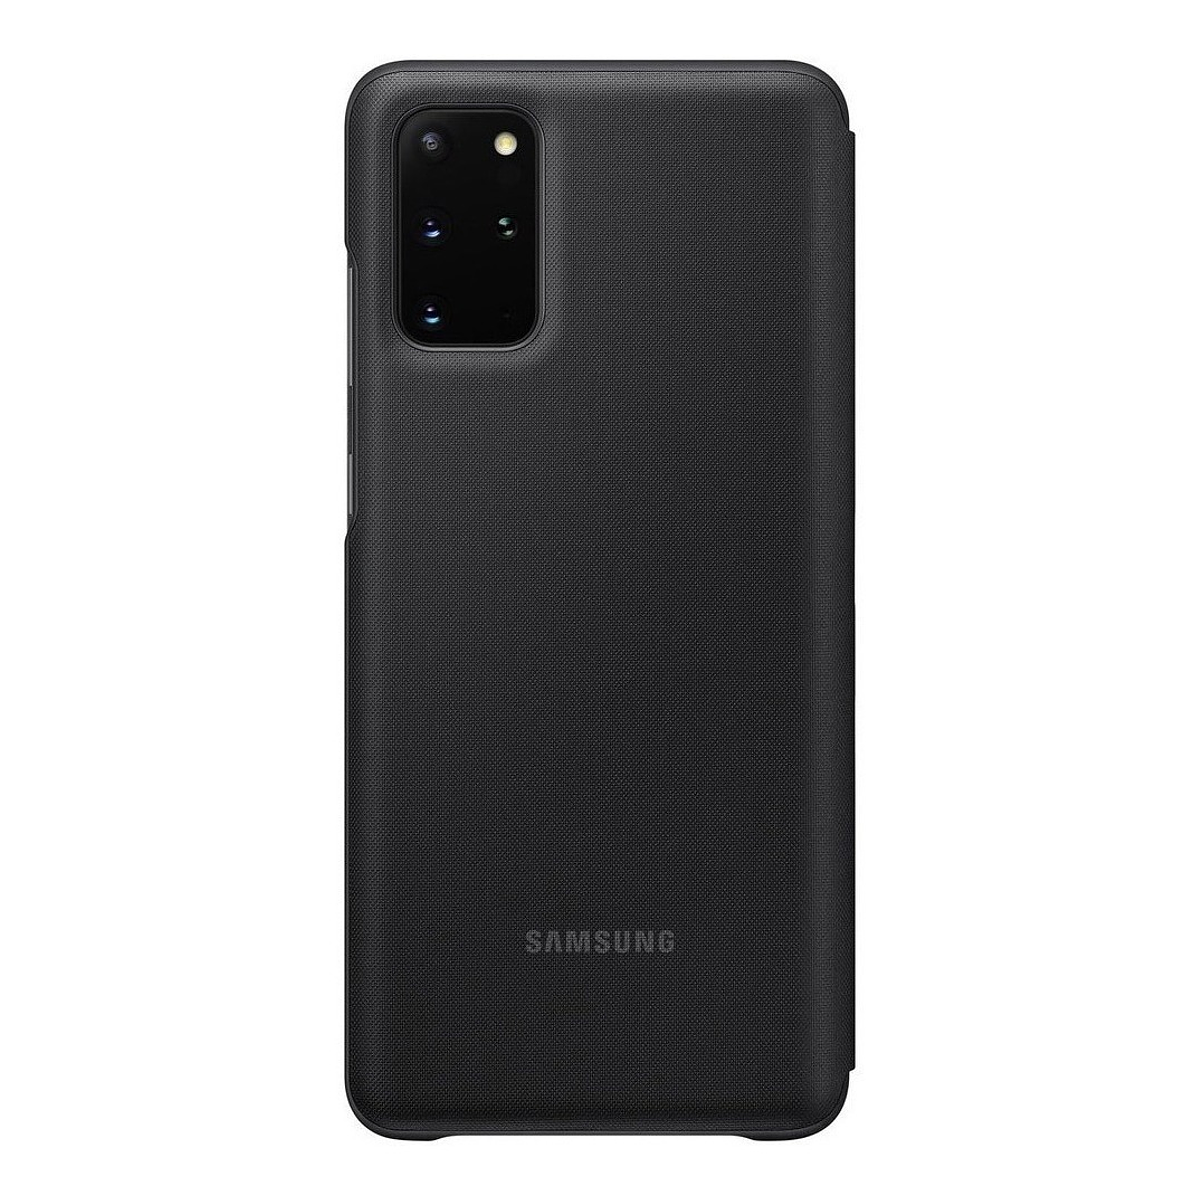 Funda Led View Cover Original Samsung Para Samsung Galaxy S20 Plus – Negro  con Ofertas en Carrefour